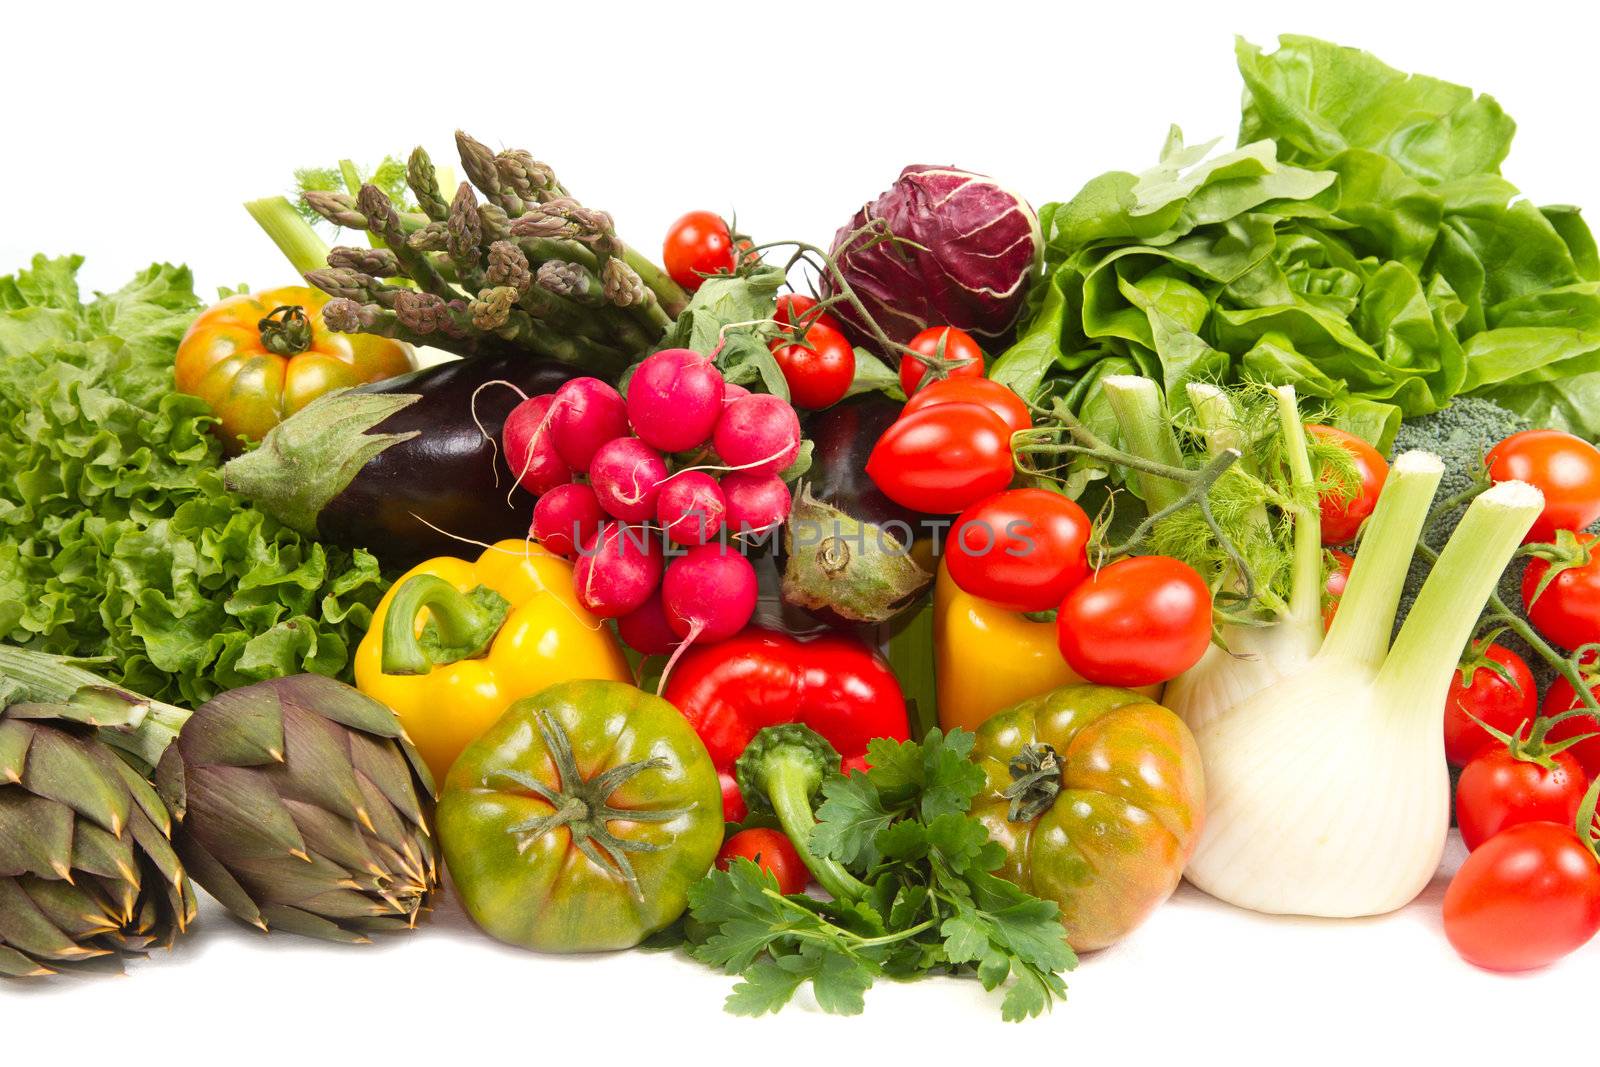 fresh vegetables by lsantilli